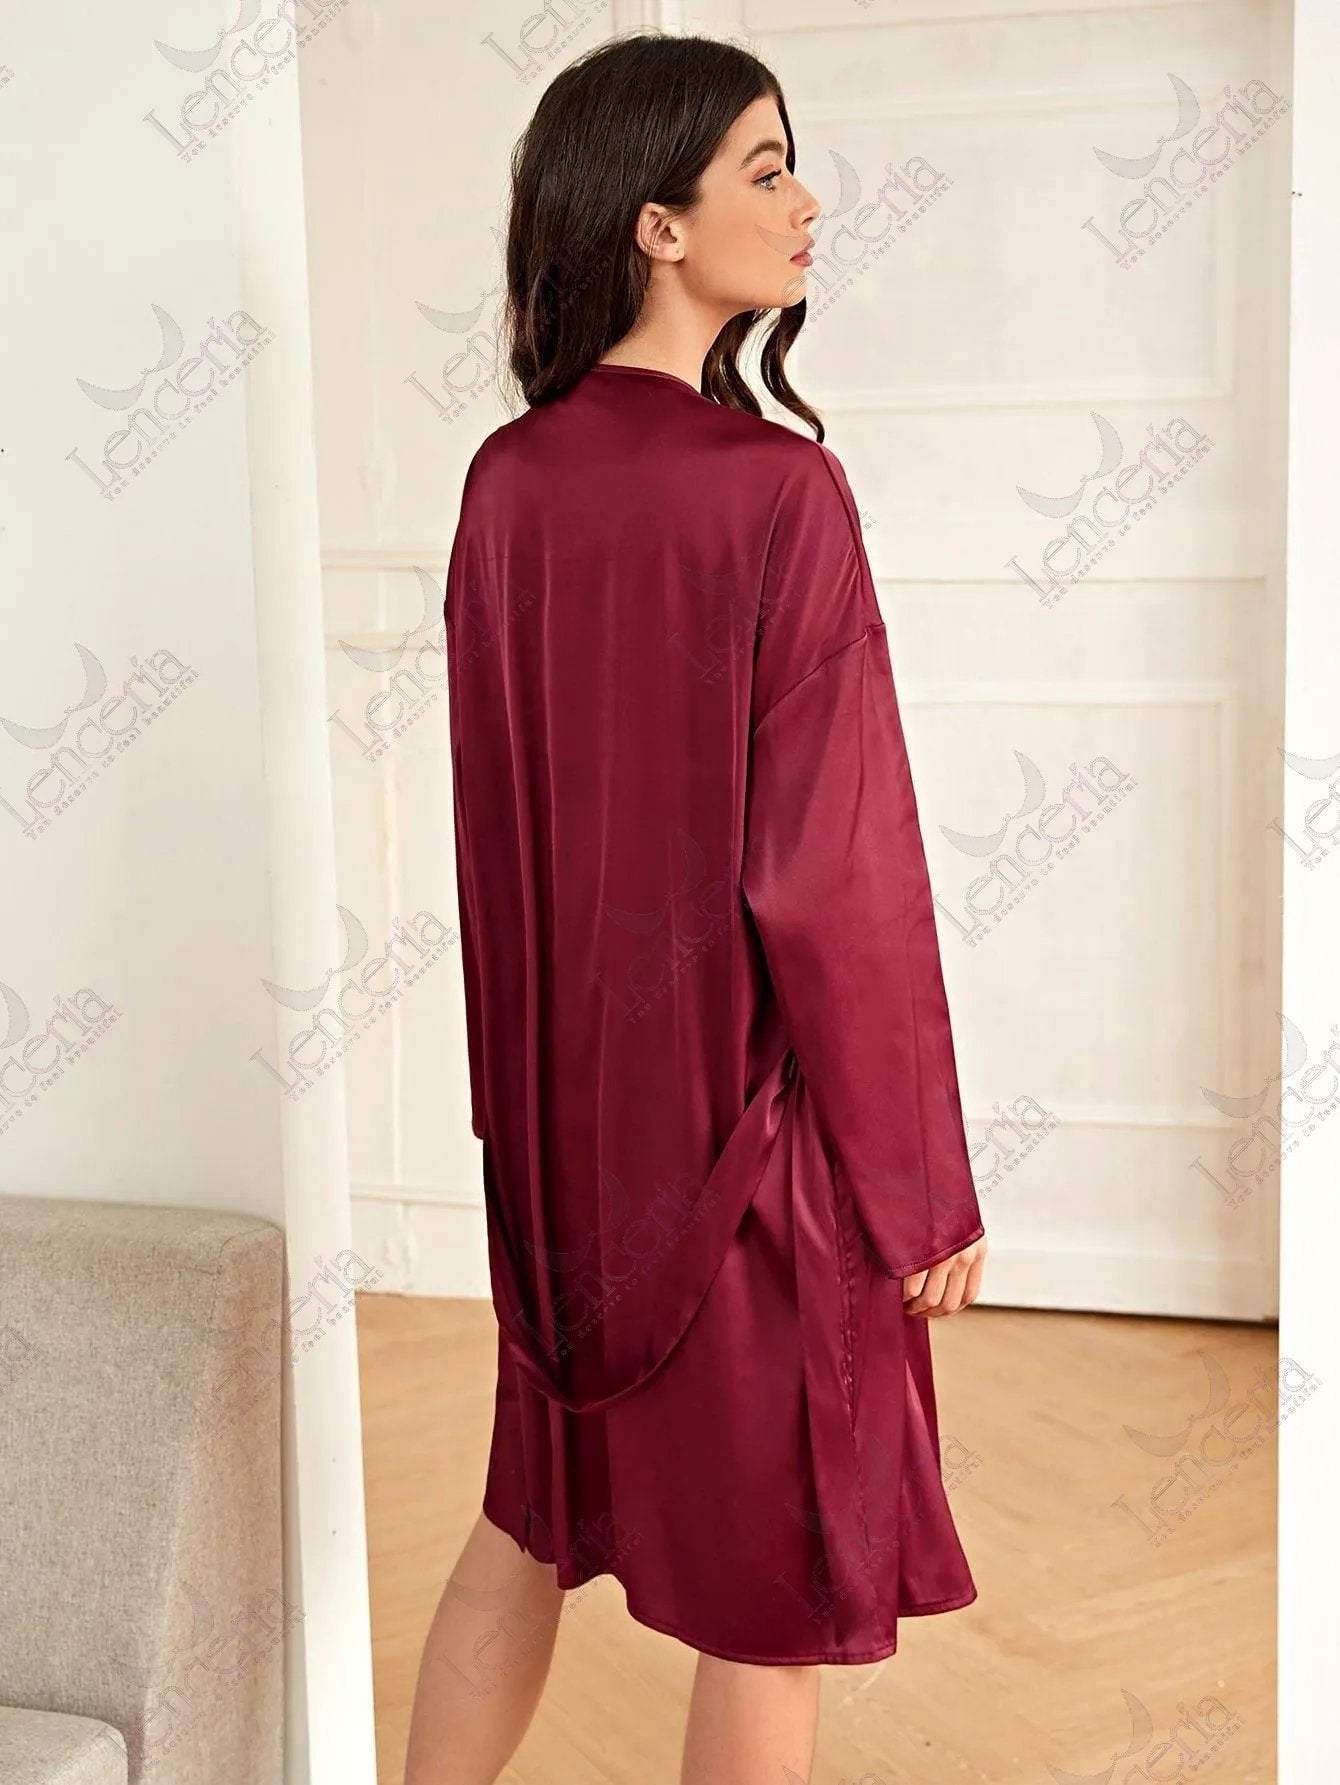 Voluptuousa fonce red robe - very elegant (m3)